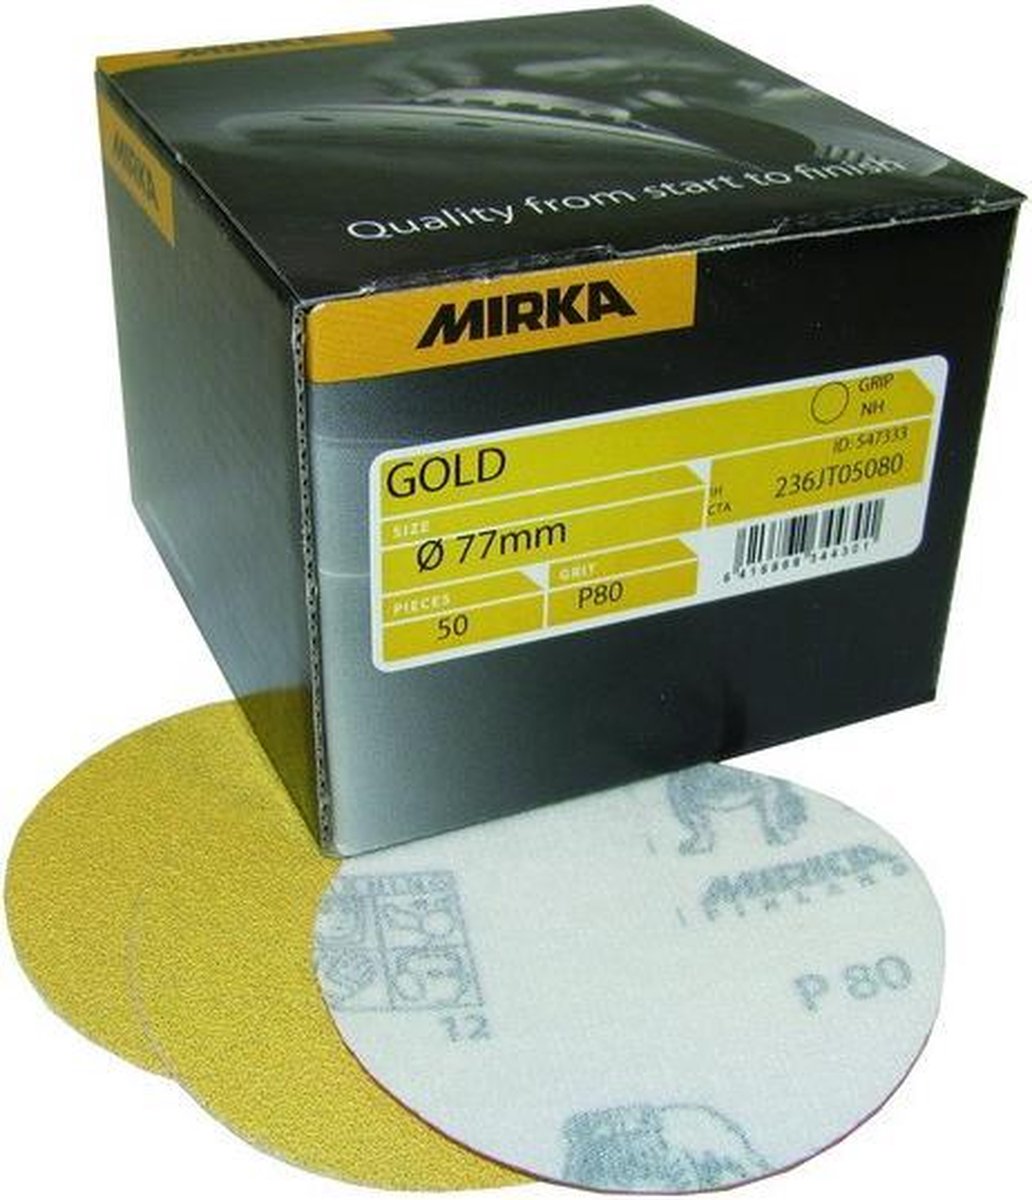 MIRKA Gold Schuurschijven 77mm zonder gaten - P80